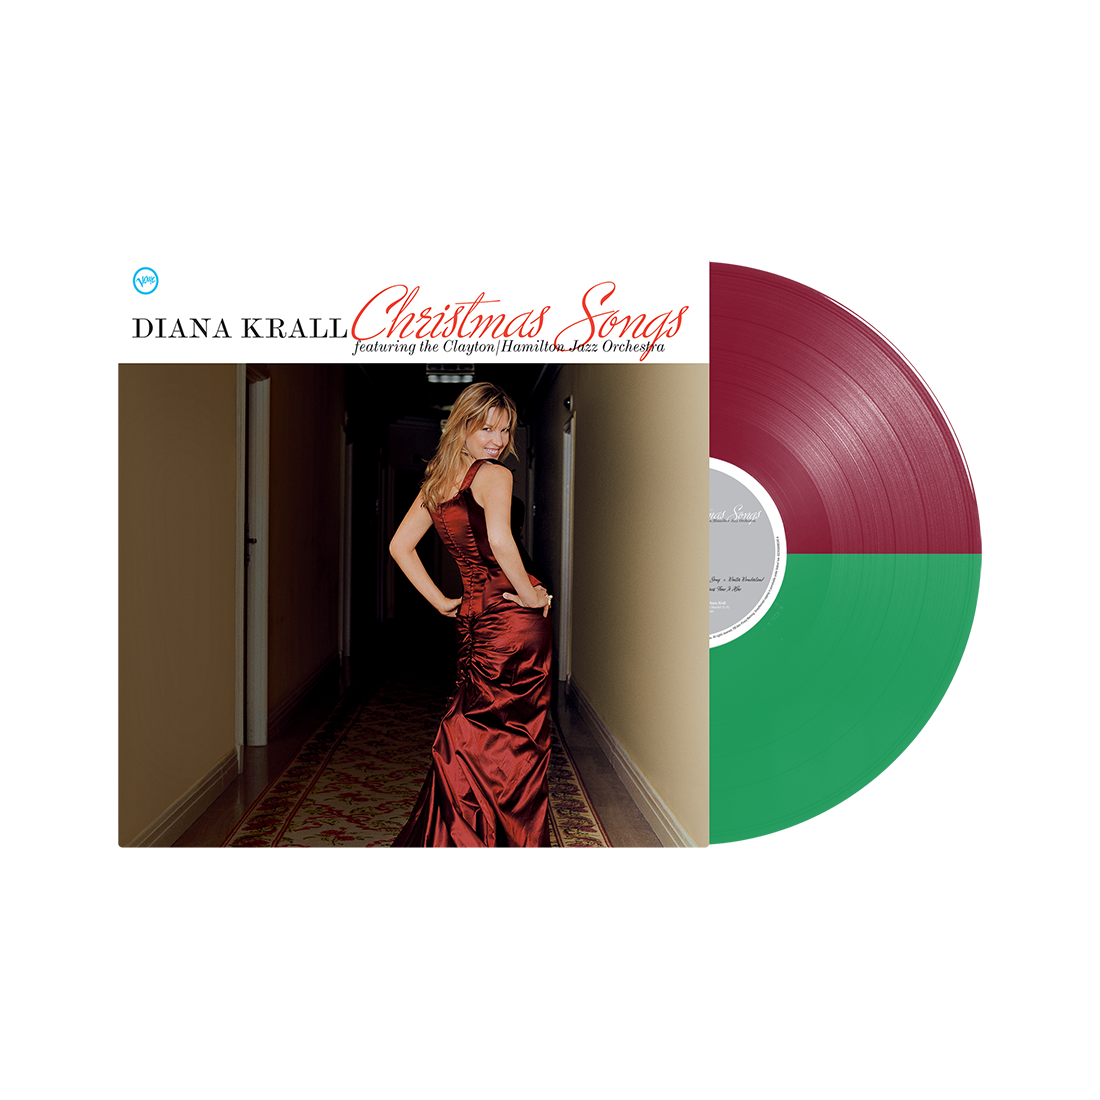 Diana Krall - Christmas Songs: Green & Red Vinyl LP